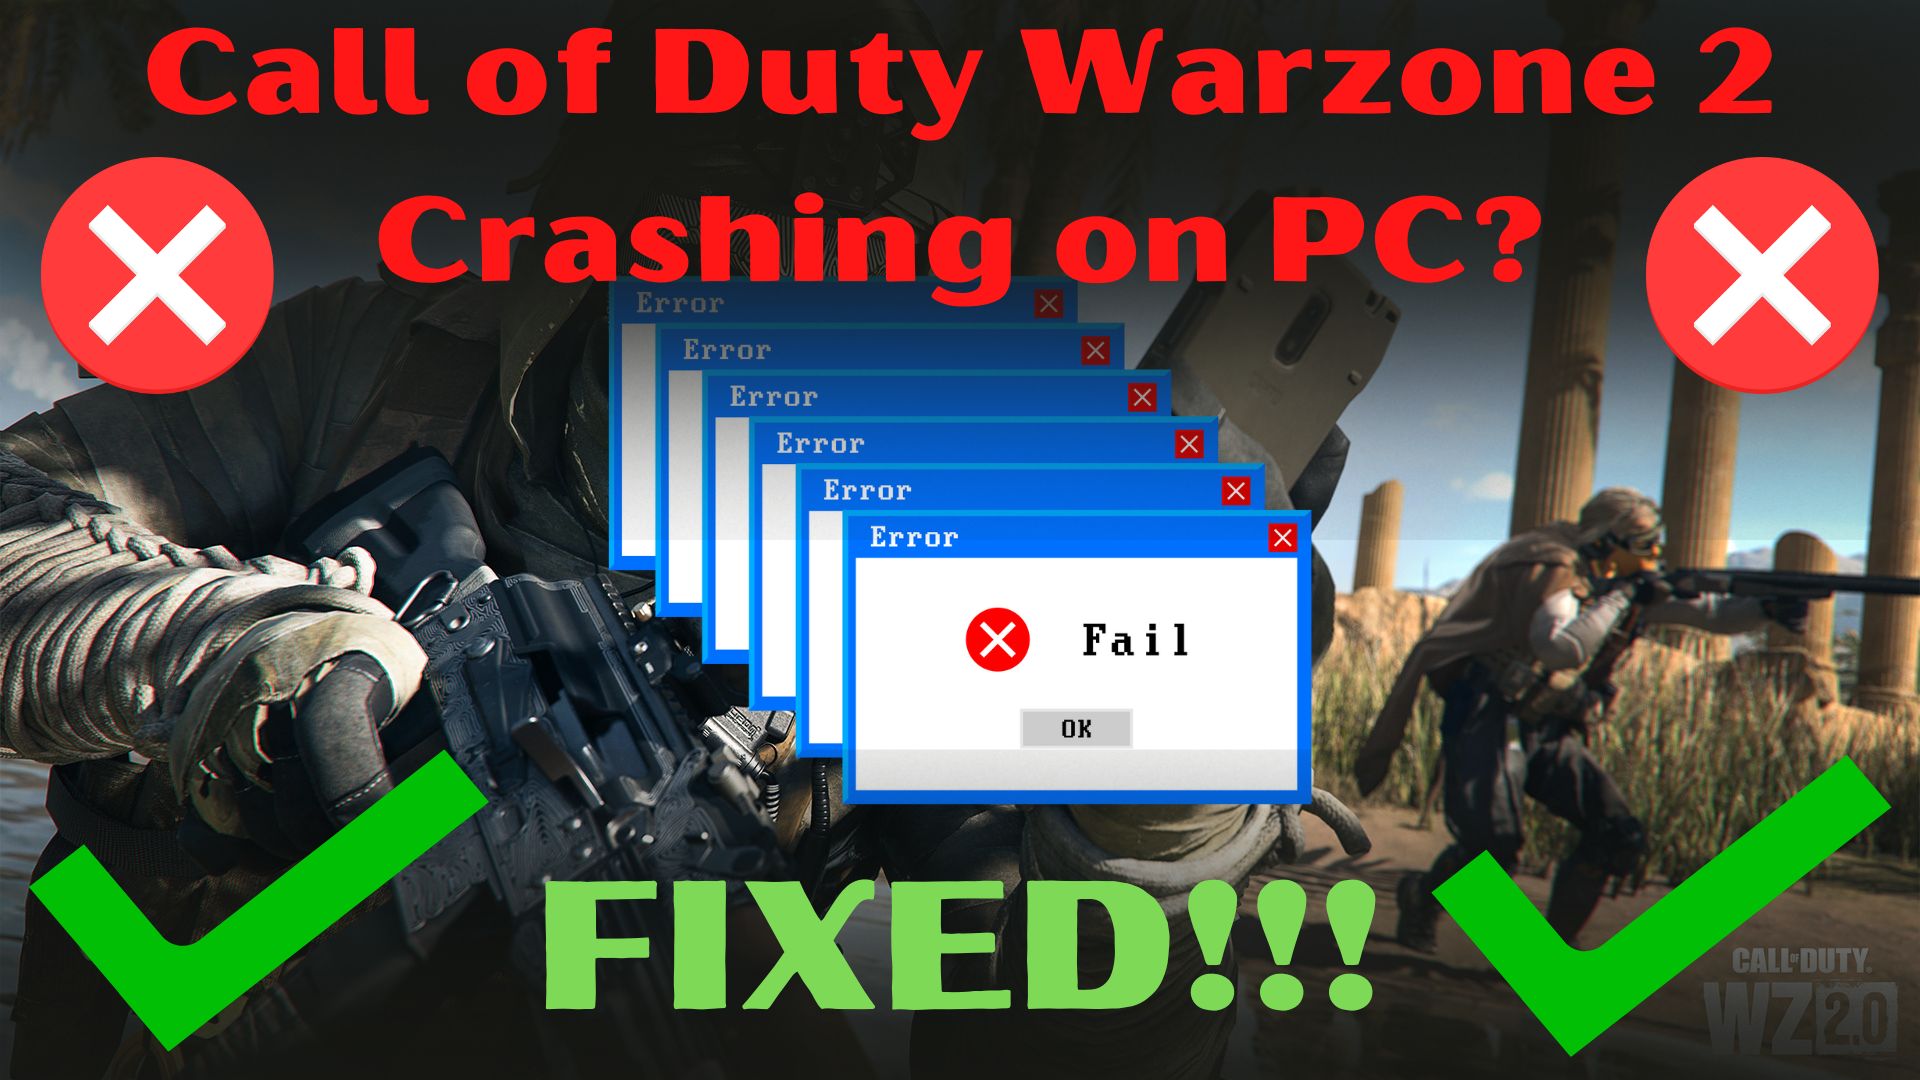 Call of Duty Warzone 2 crashing on PC: Fixed